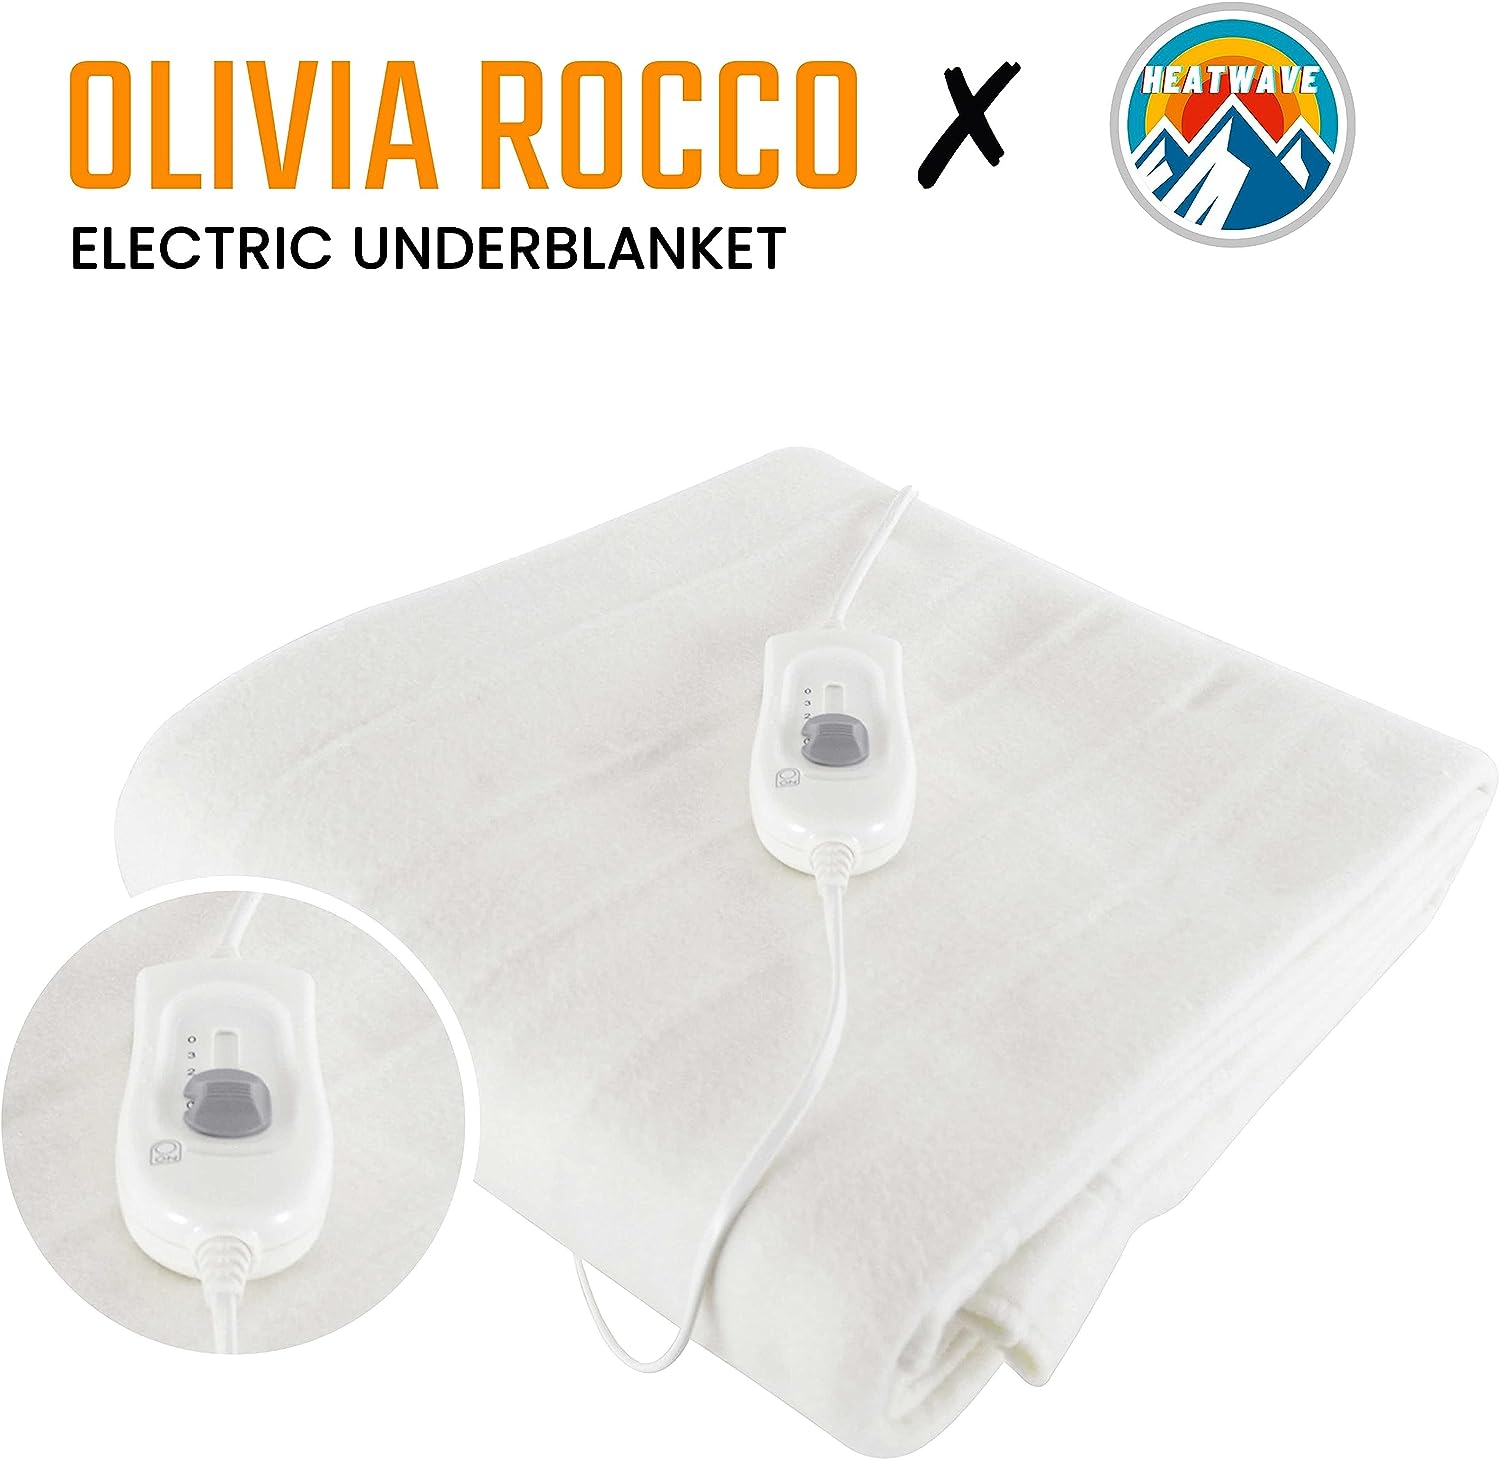 Heatwave Heated Blankets 3 Heat Settings Electric Underblanket Fast Heat Up OLIVIA ROCCO Blankets